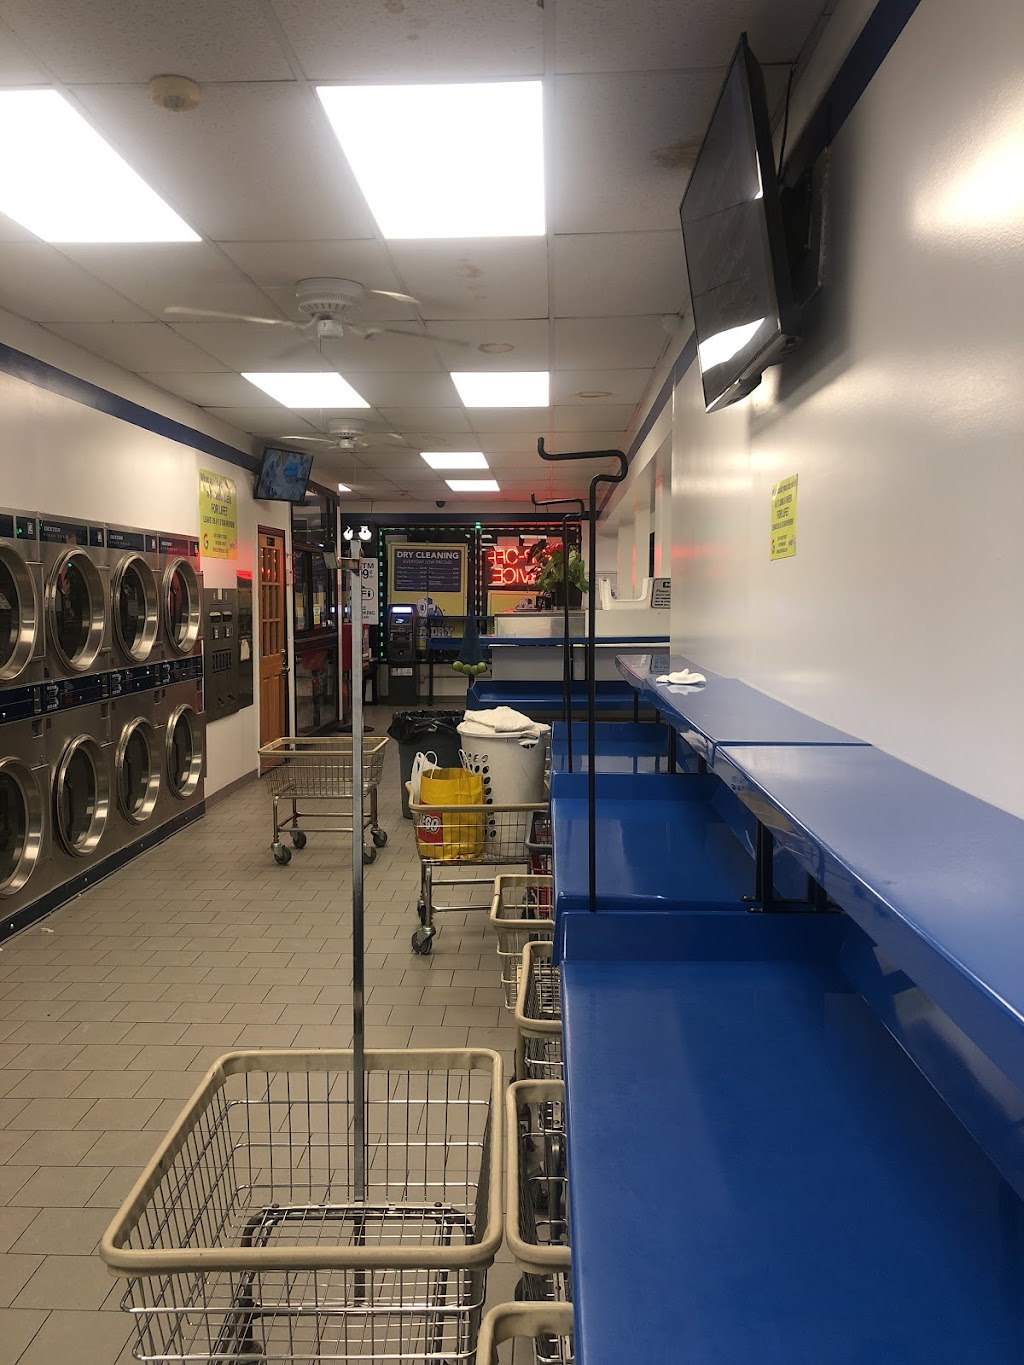 Laneys Laundry & Dry Clean | 3302, 165 Dubois Ave, Valley Stream, NY 11581 | Phone: (516) 887-0470